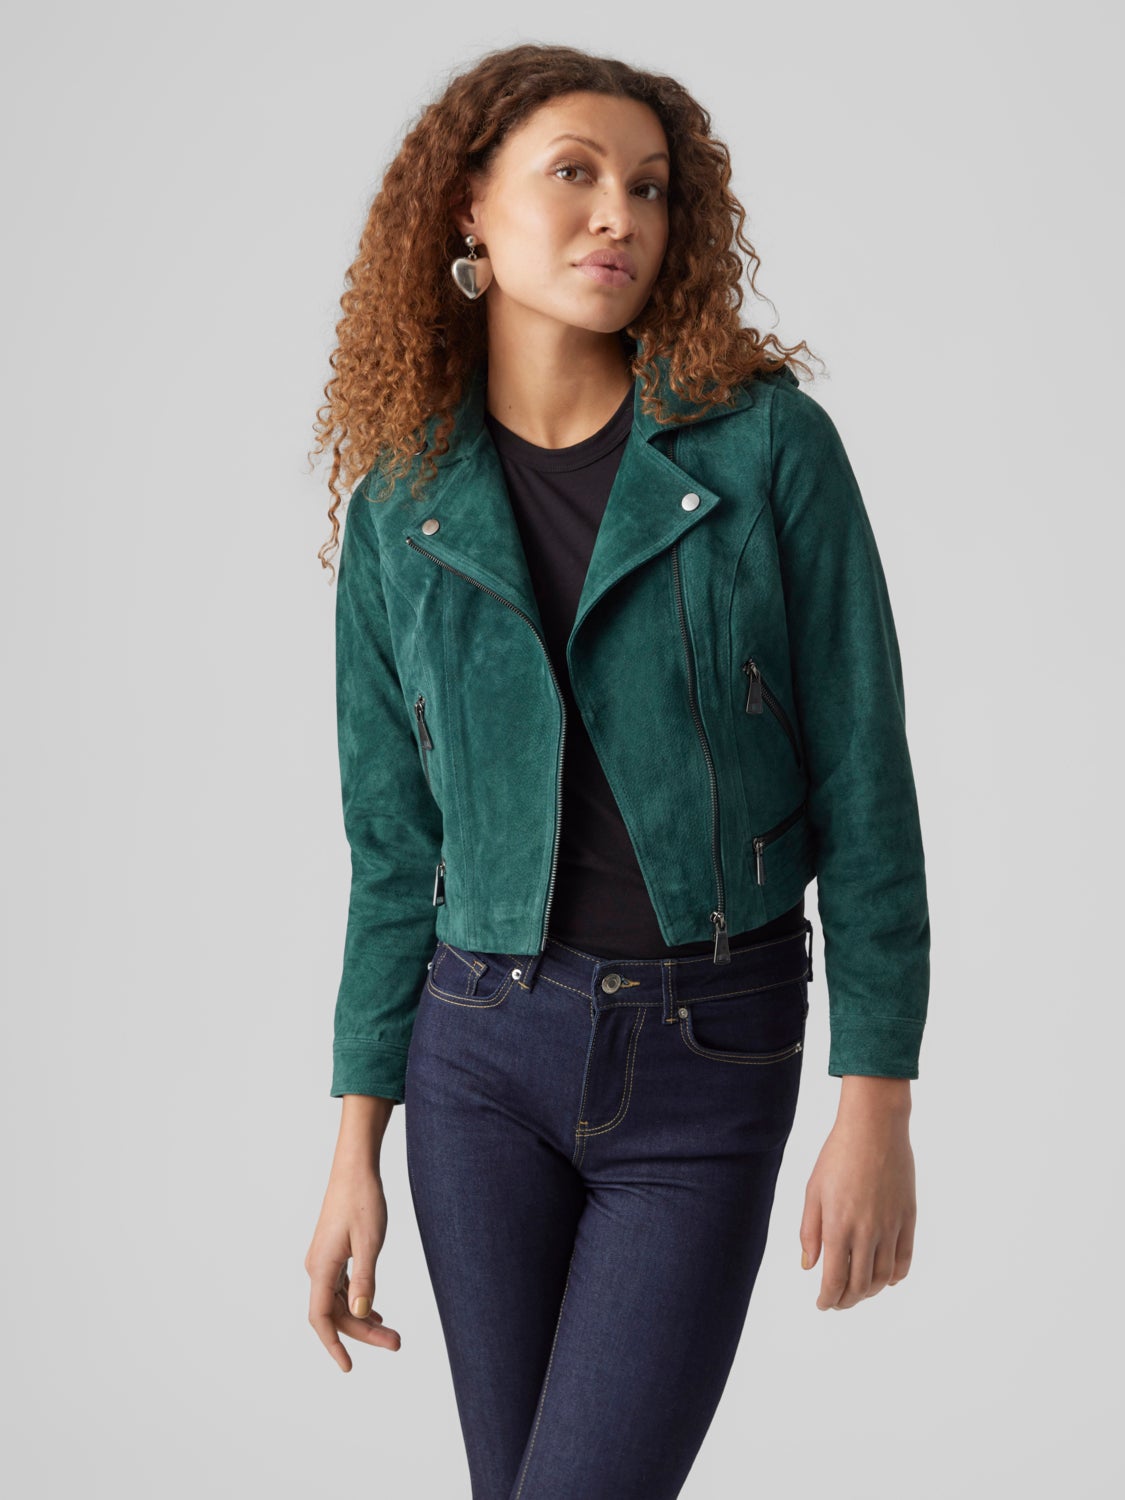 discount 71% WOMEN FASHION Jackets Jacket Jean Vero Moda jacket Blue M 